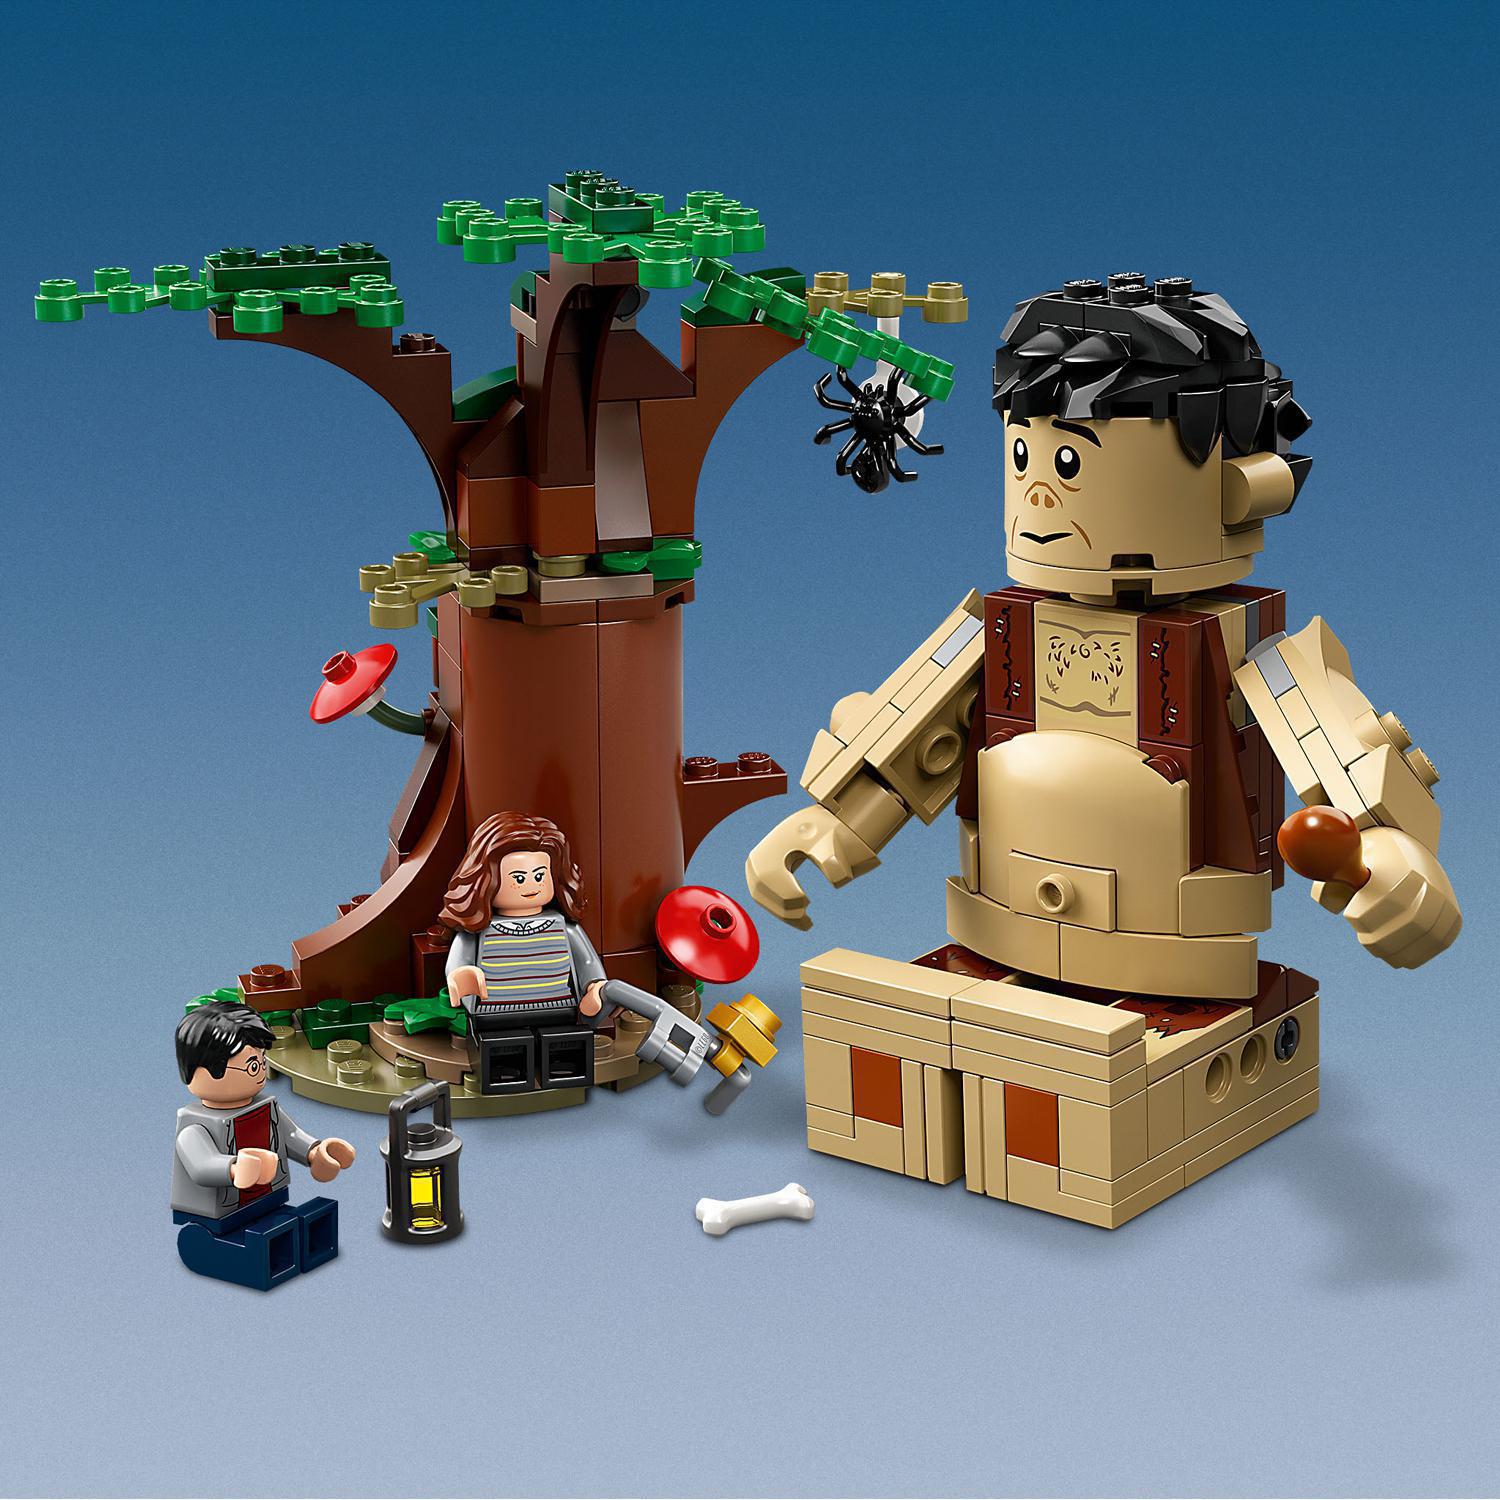 LEGO® Harry Potter Forbidden Forest Play Set 75967 Default Title